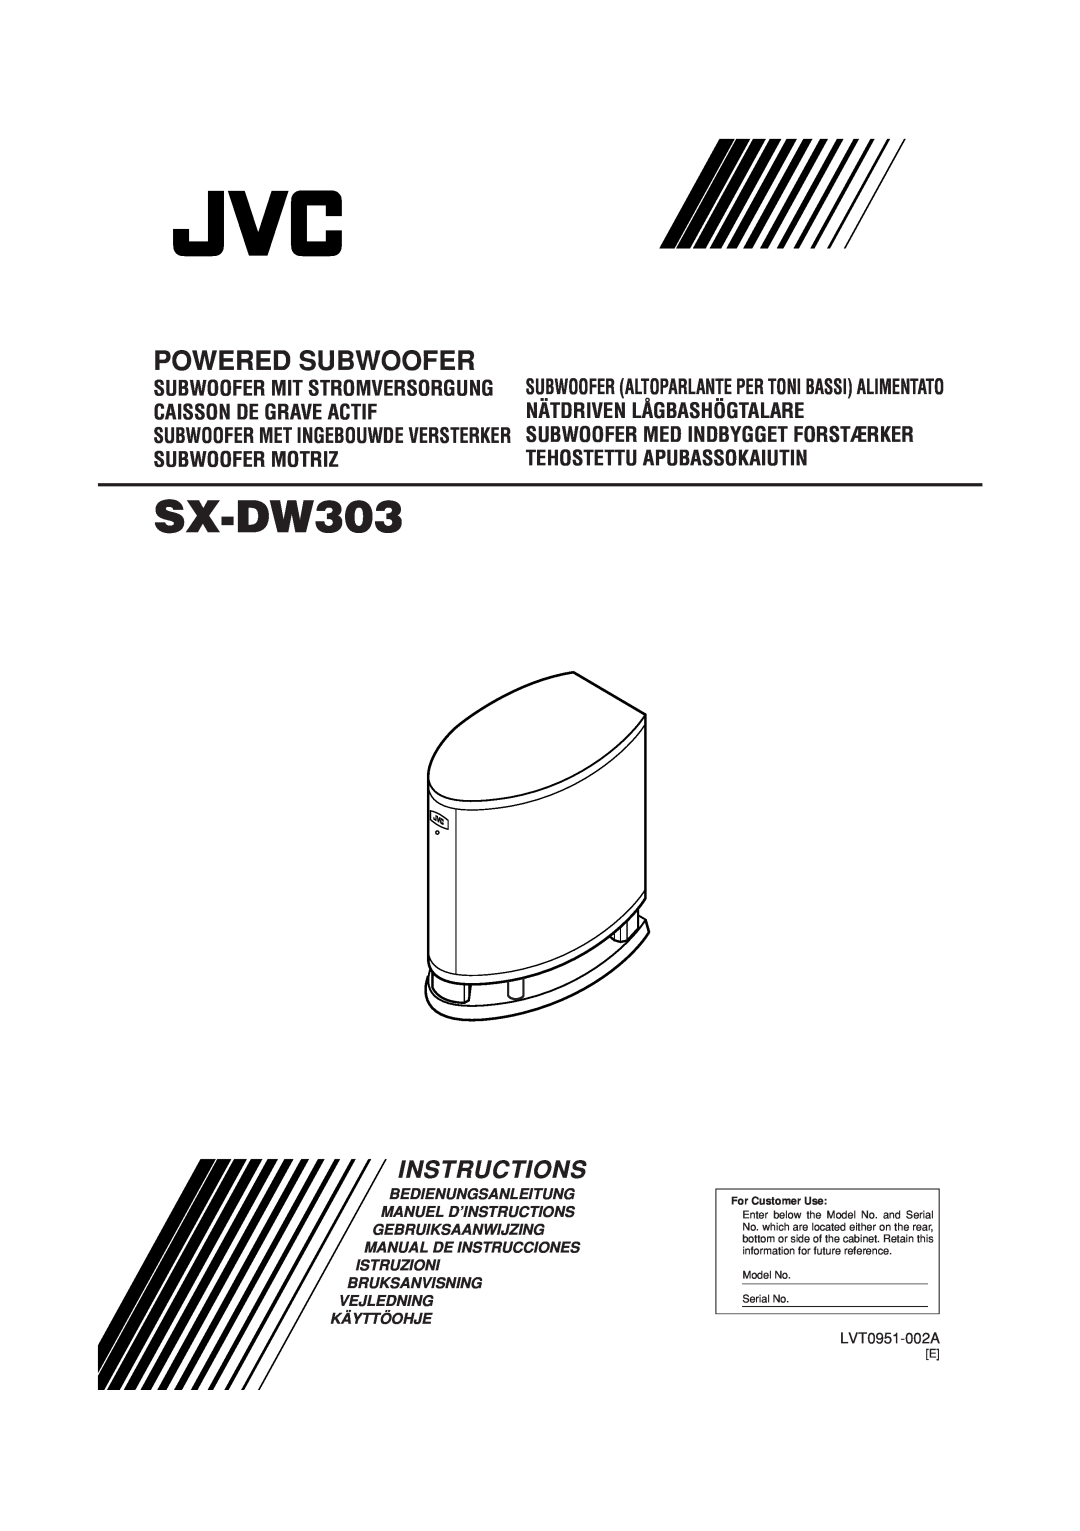 JVC SW-DW303 manual LVT0951-002A, SX-DW303, Compact Component System, Powered Subwoofer, Instructions, Bedienungsanleitung 